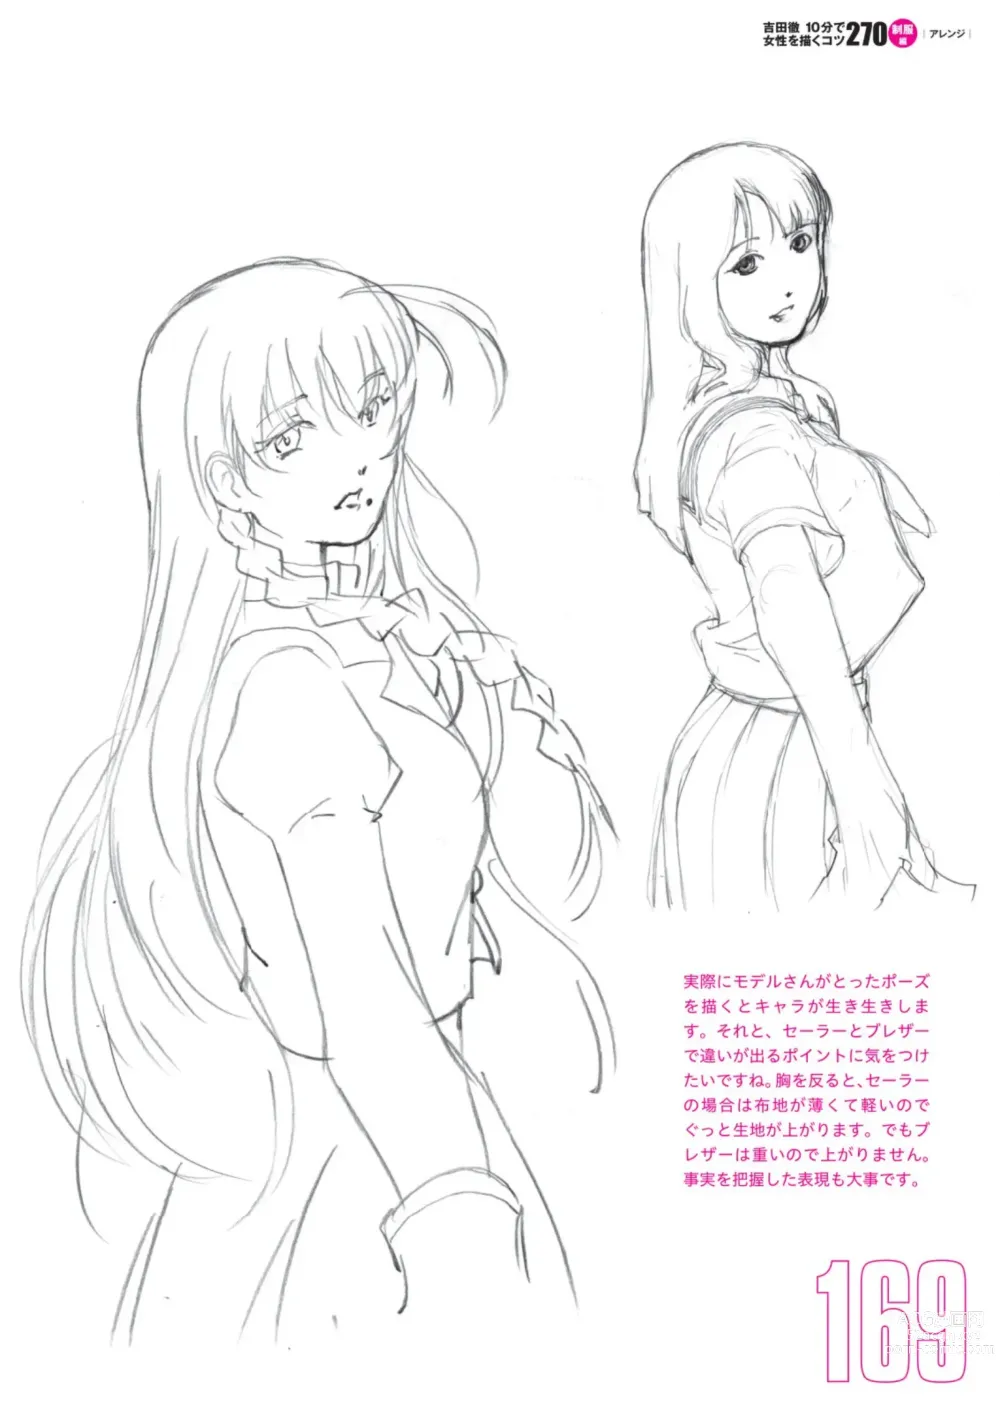 Page 151 of manga Toru Yoshida Tips for drawing women in 10 minutes 270 Uniforms